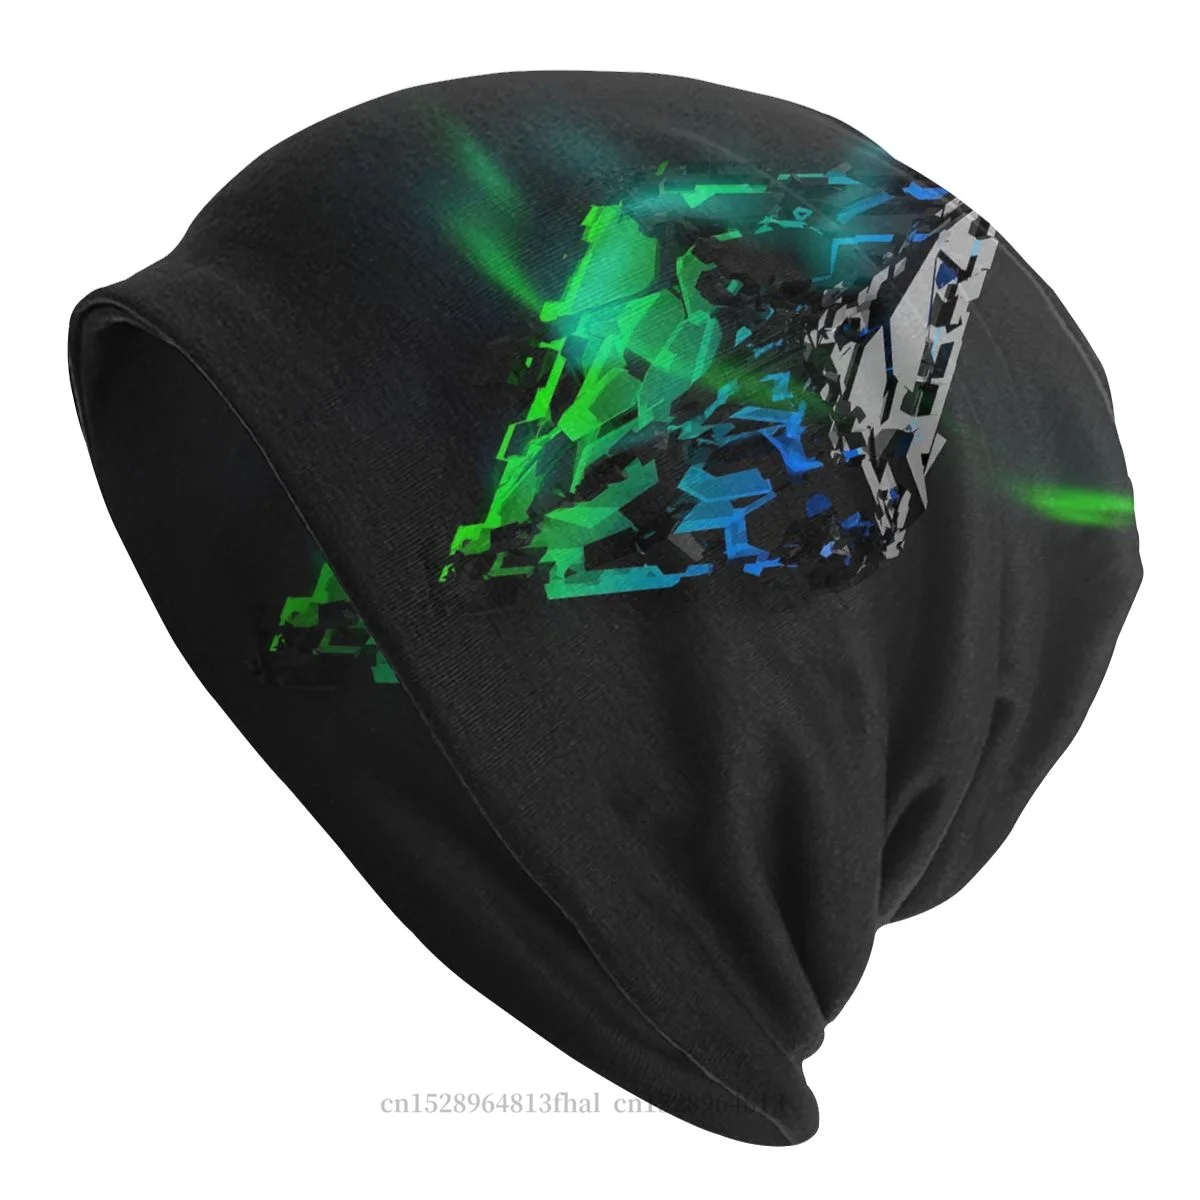 

Bonnet Hats Cyptocurrency Men Women's Ethereum Colorful Winter Warm Cap Design Skullies Beanies Caps